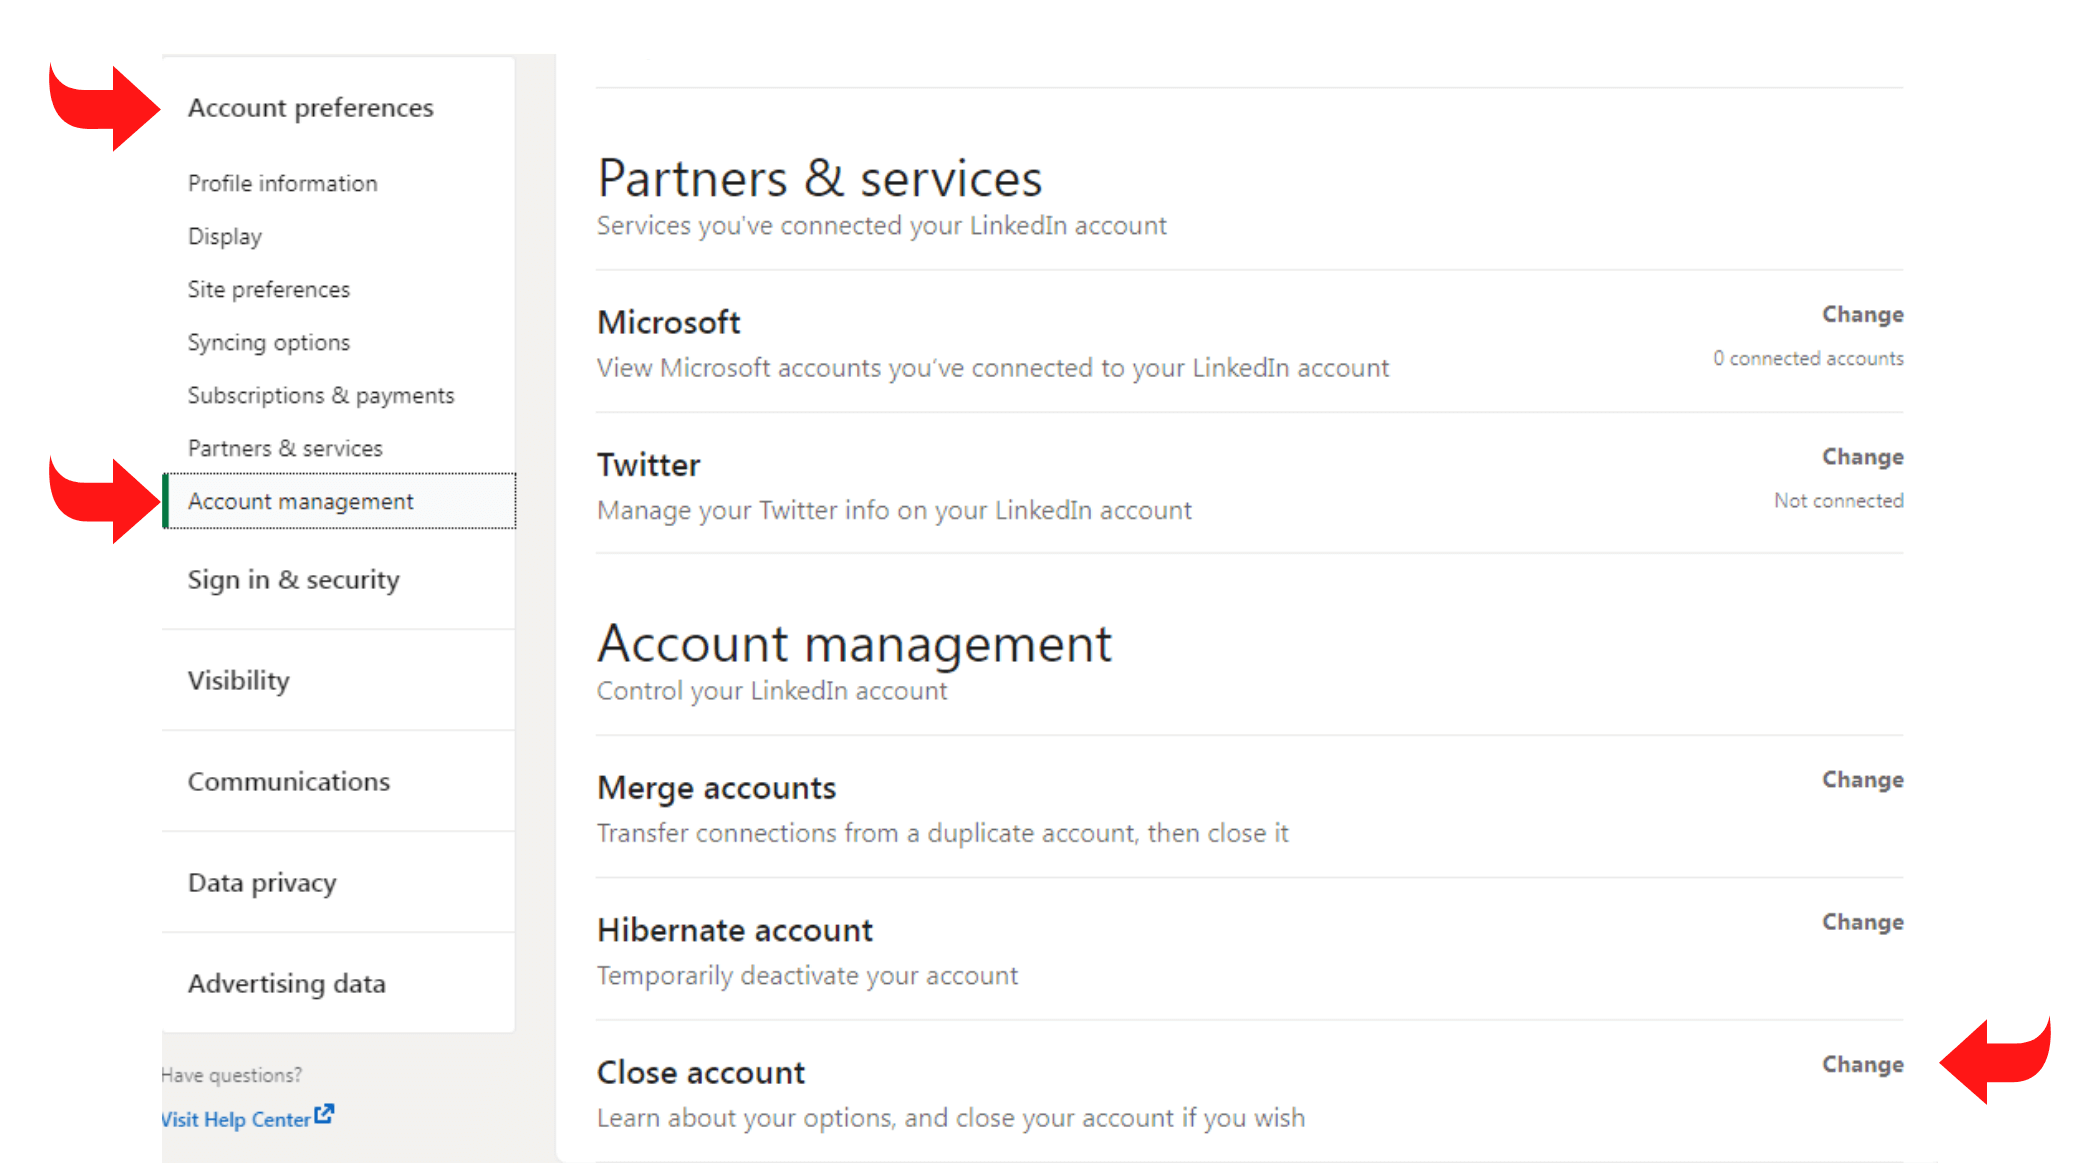 account-management-close-account